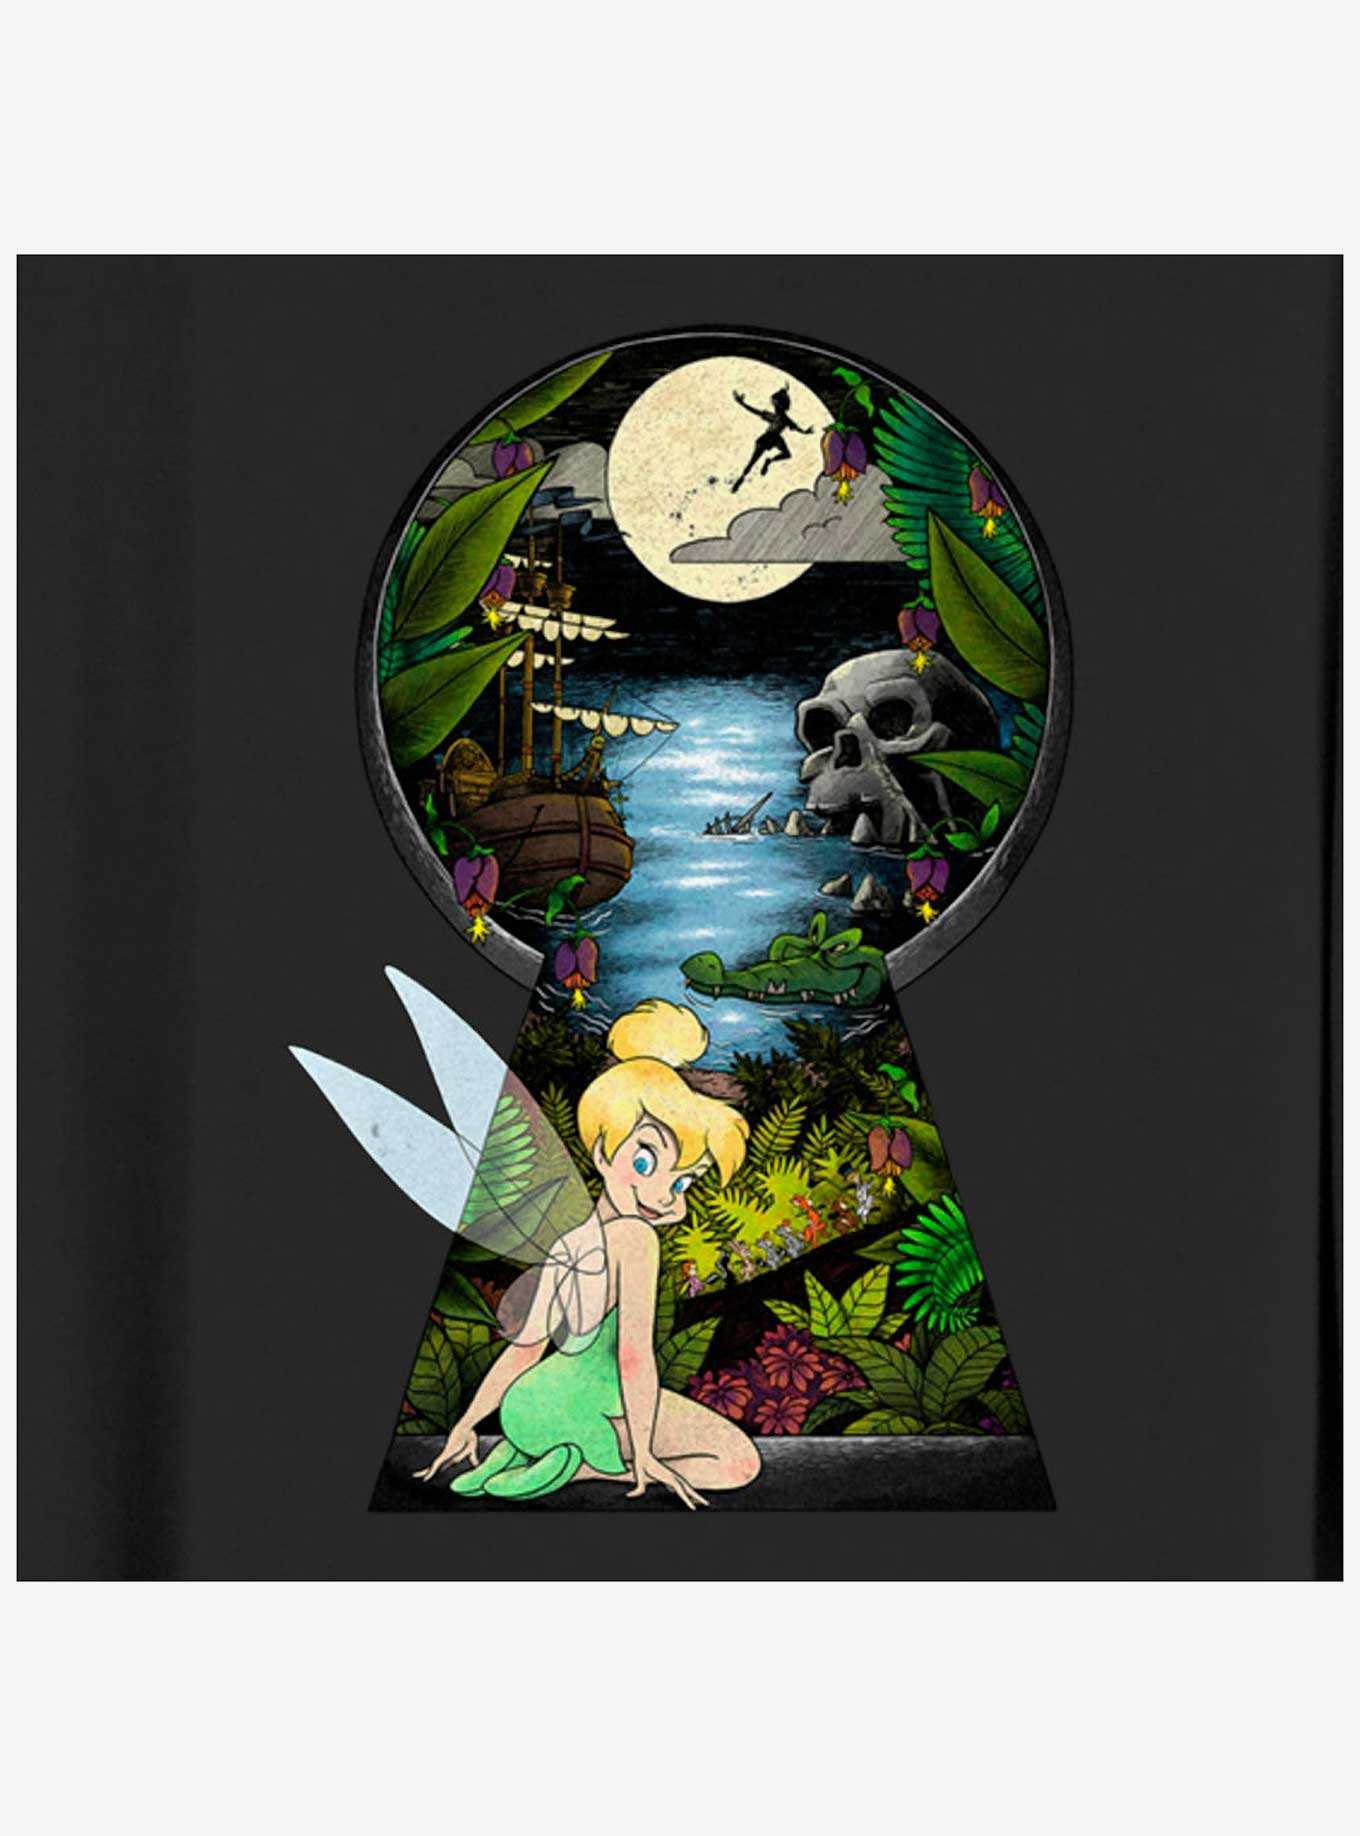 Disney Tinker Bell Keyhole To Neverland Girls T-Shirt Plus Size, , hi-res